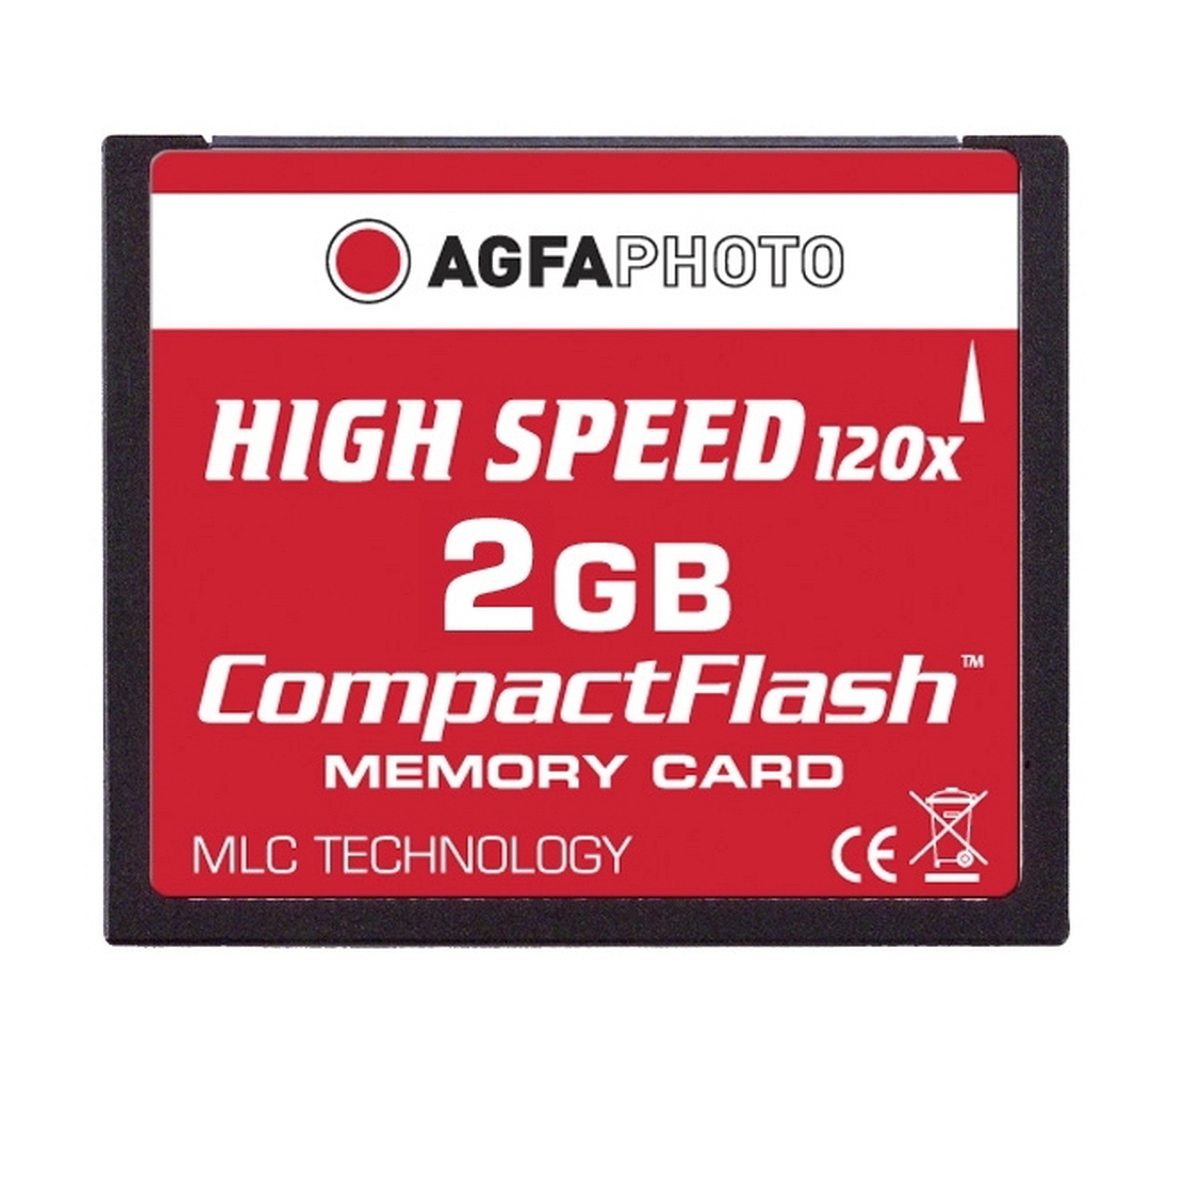 AgfaPhoto 2 GB Compact Flash Highspeed